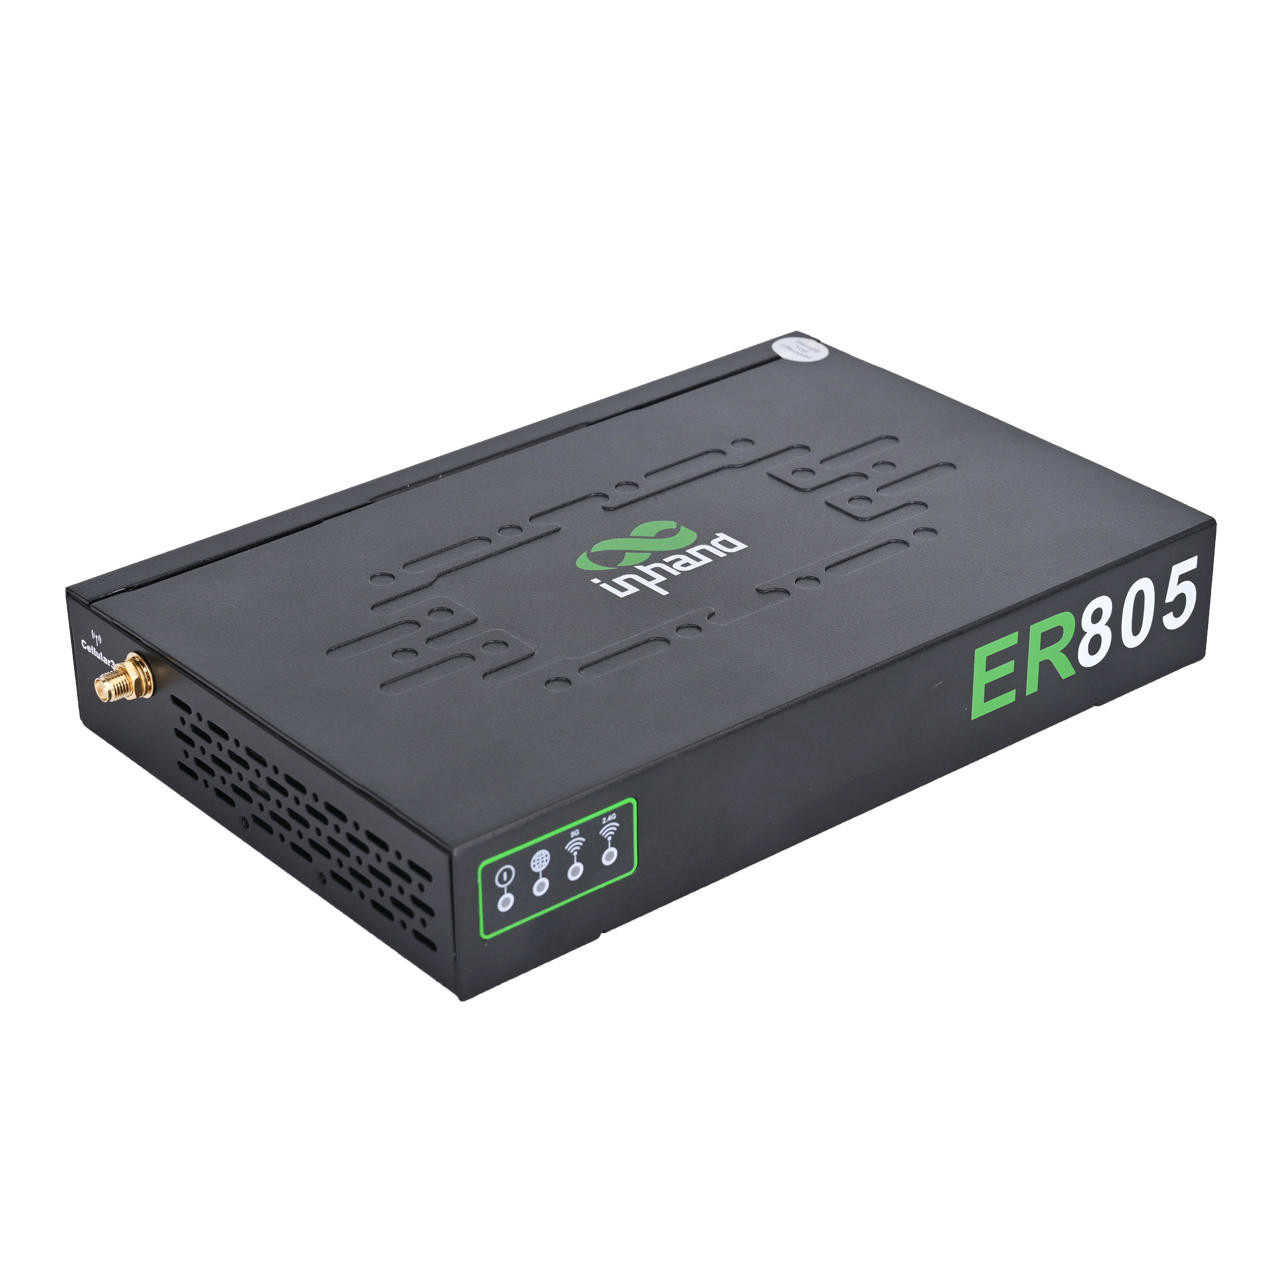 InHand Networks' ER805 Router